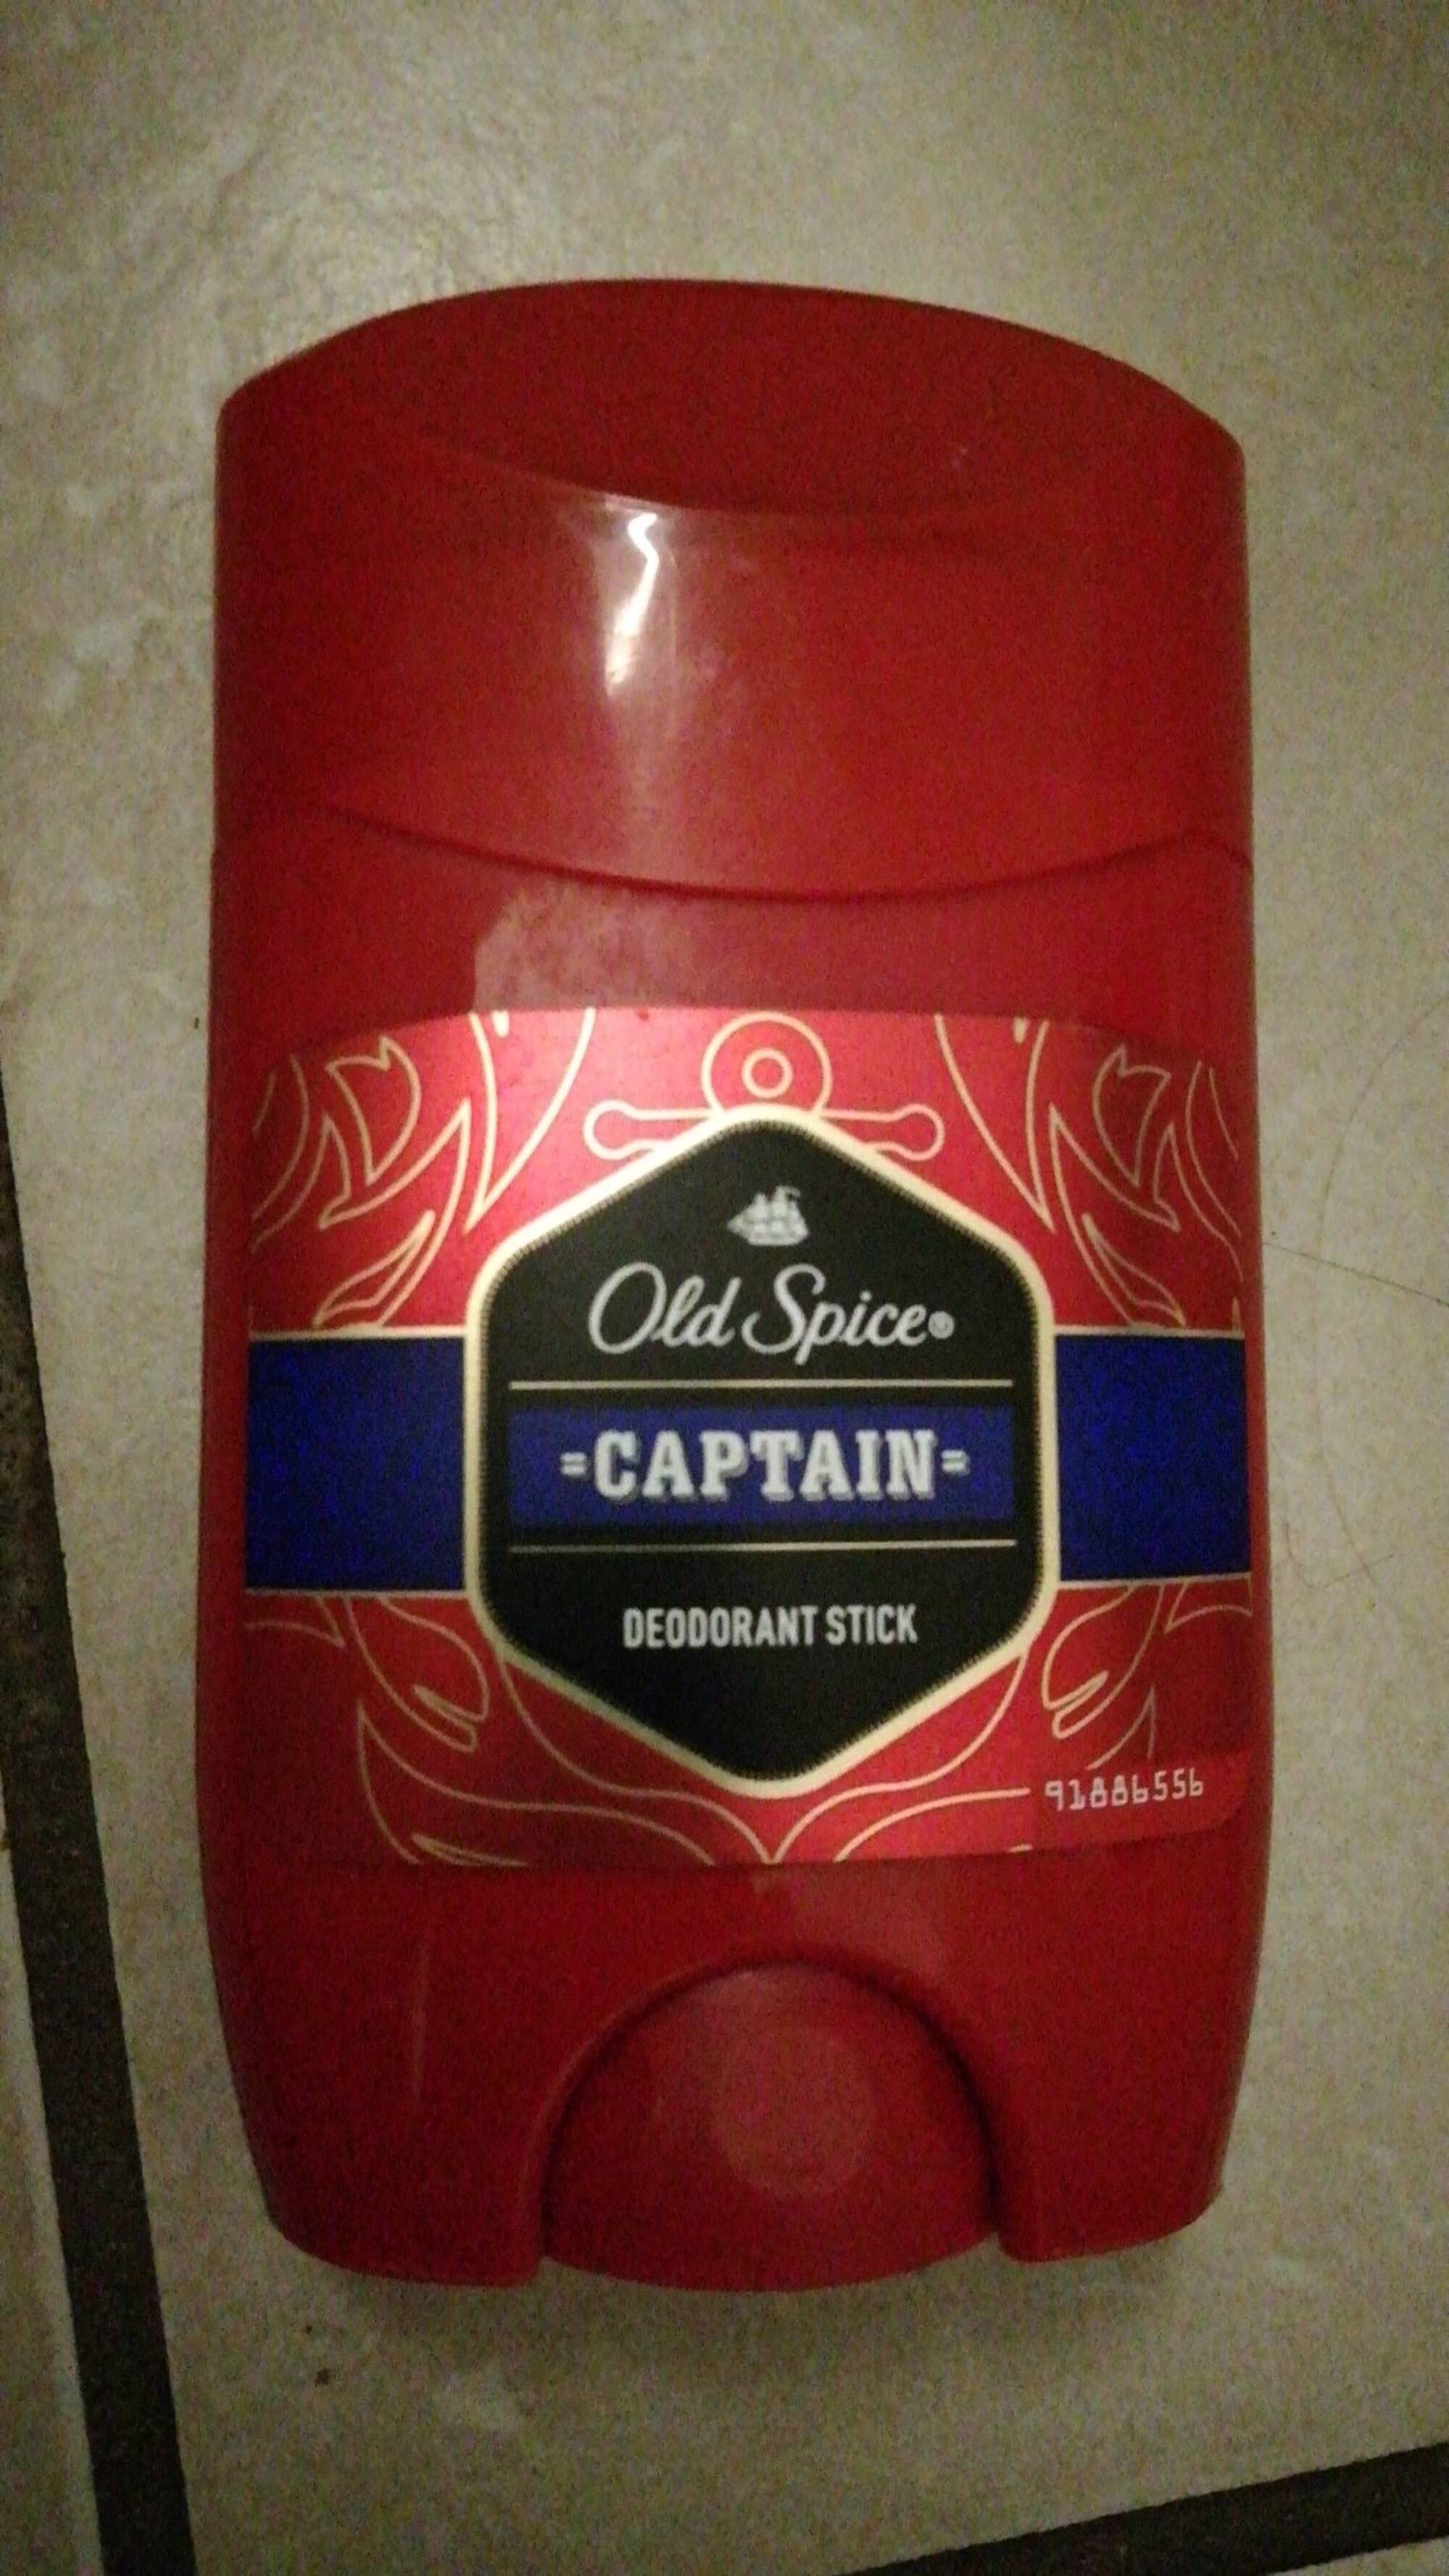 OLD SPICE - Captain - Déodorant stick